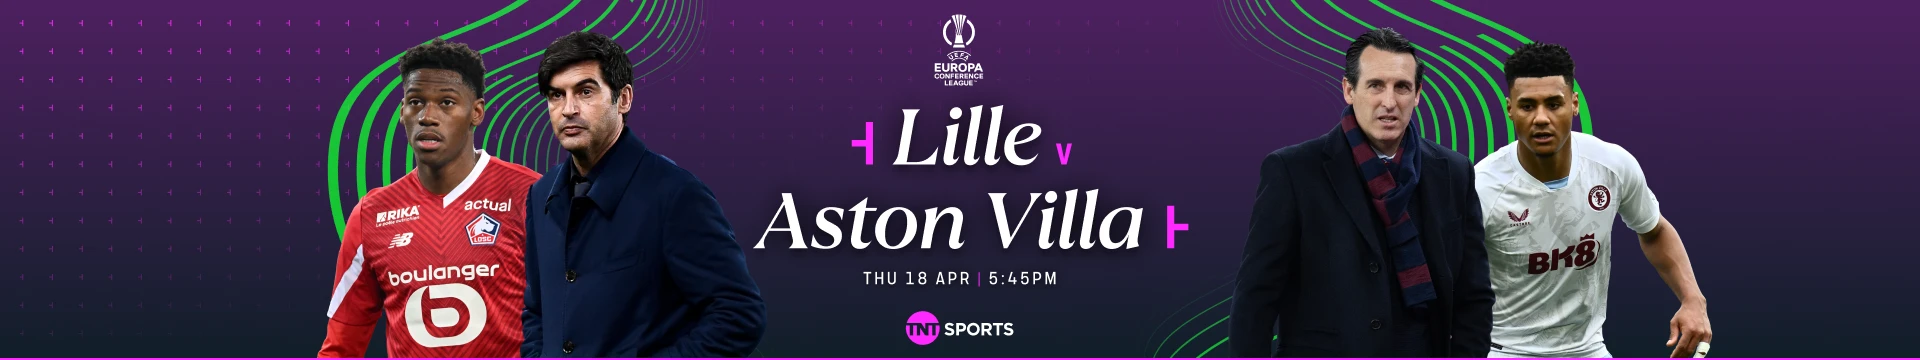 Lille v Aston Villa Thursday 18 April at 5:45pm